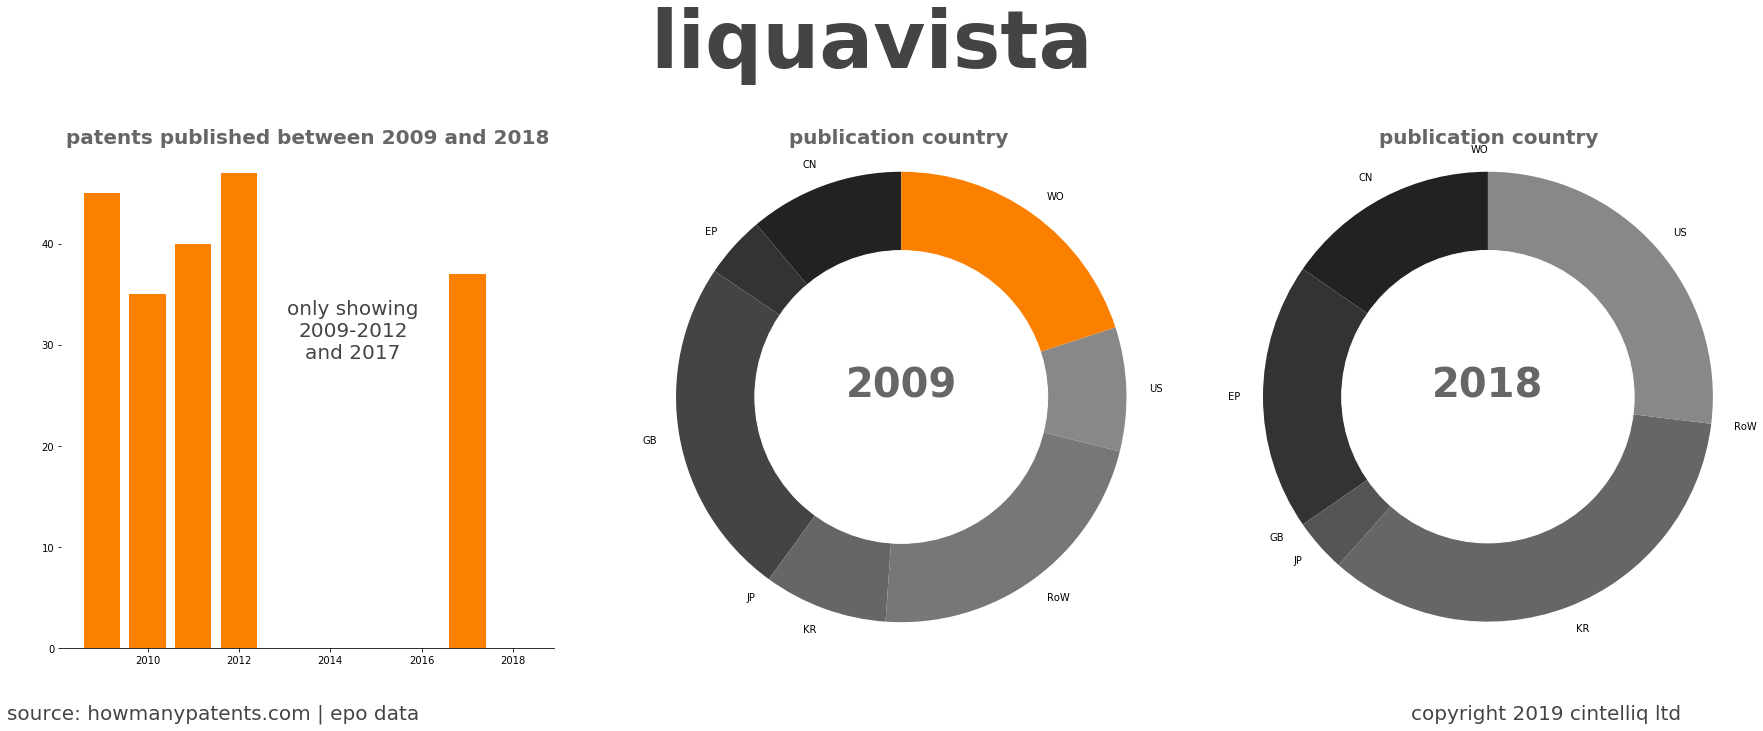 summary of patents for Liquavista